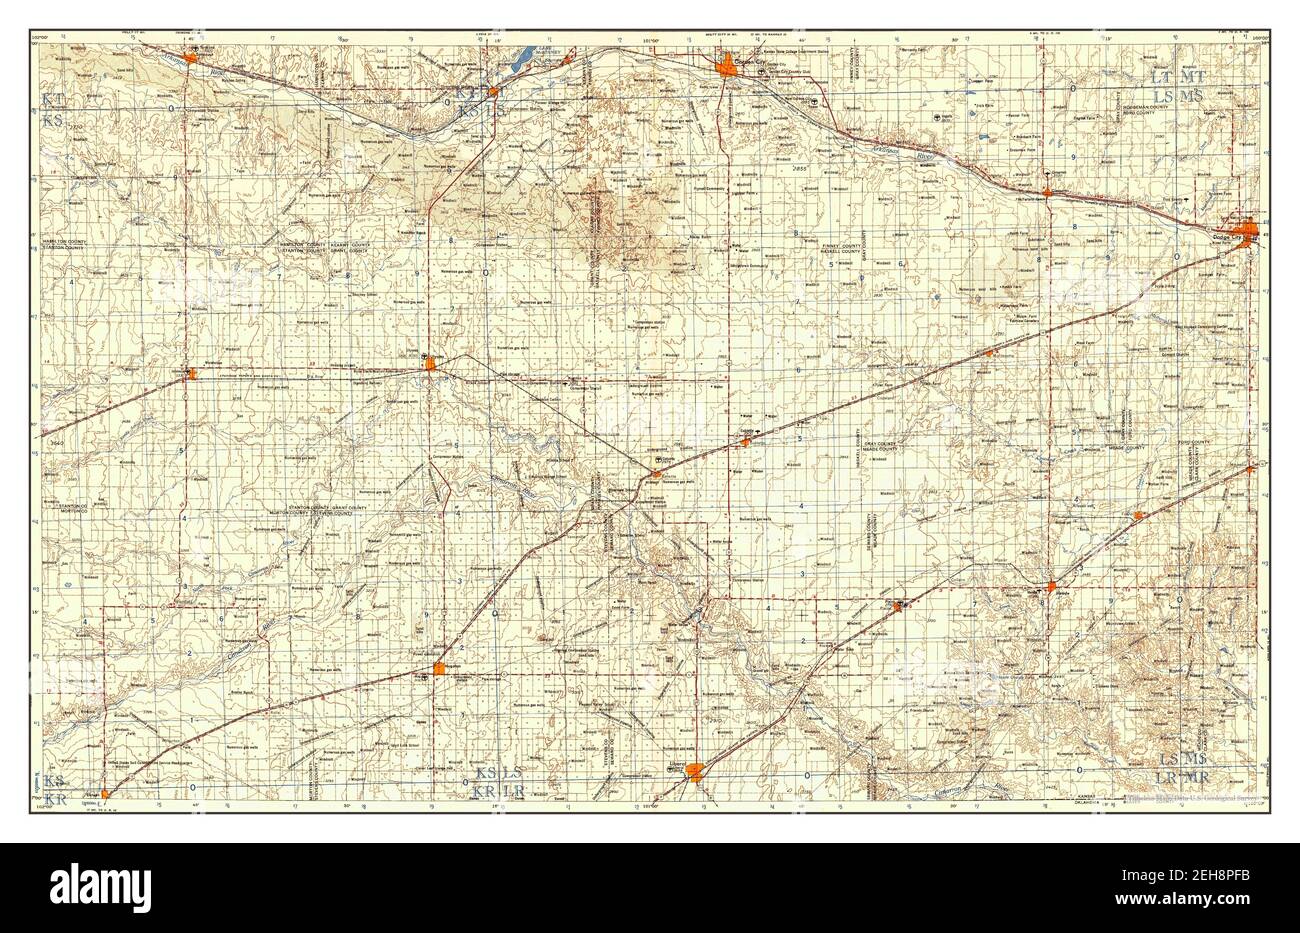 Dodge City, Kansas, map 1958, 1:250000, United States of America by Timeless Maps, data U.S. Geological Survey Stock Photo